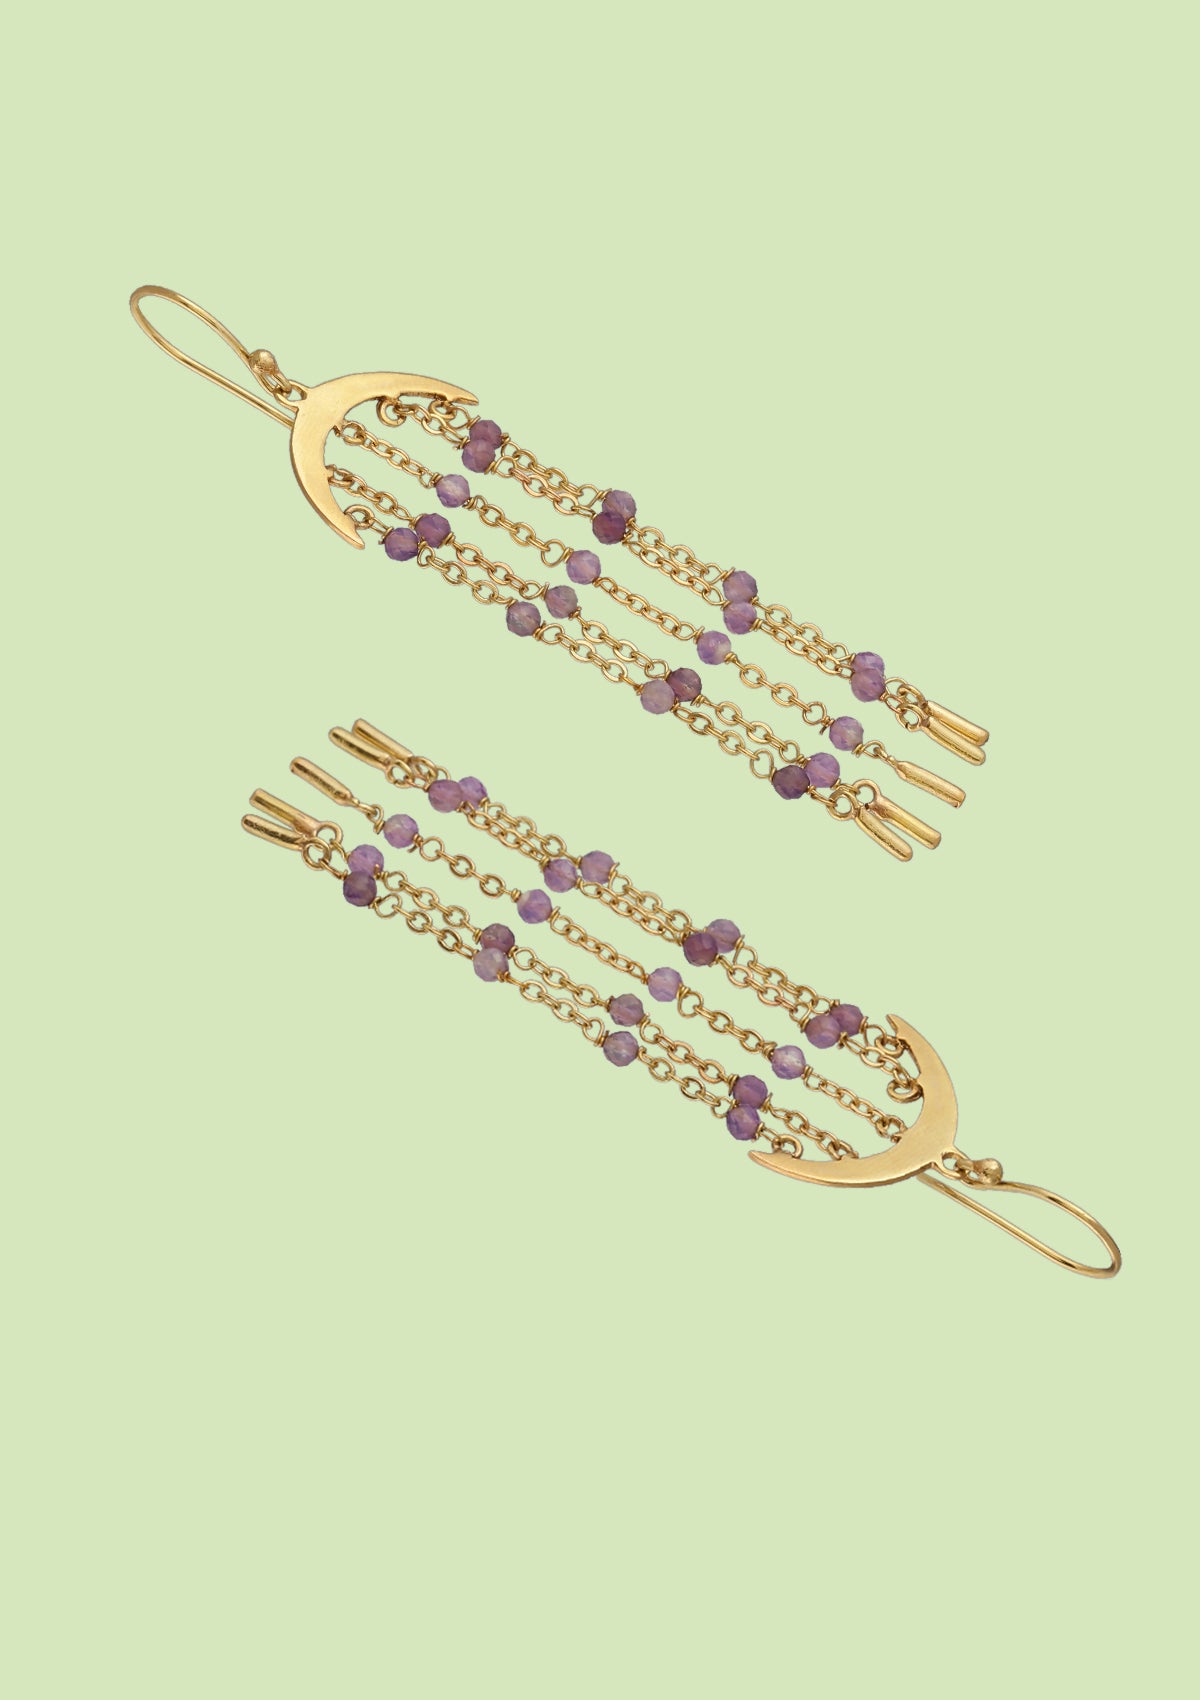 Amethyst Beads Earring - IshqMe